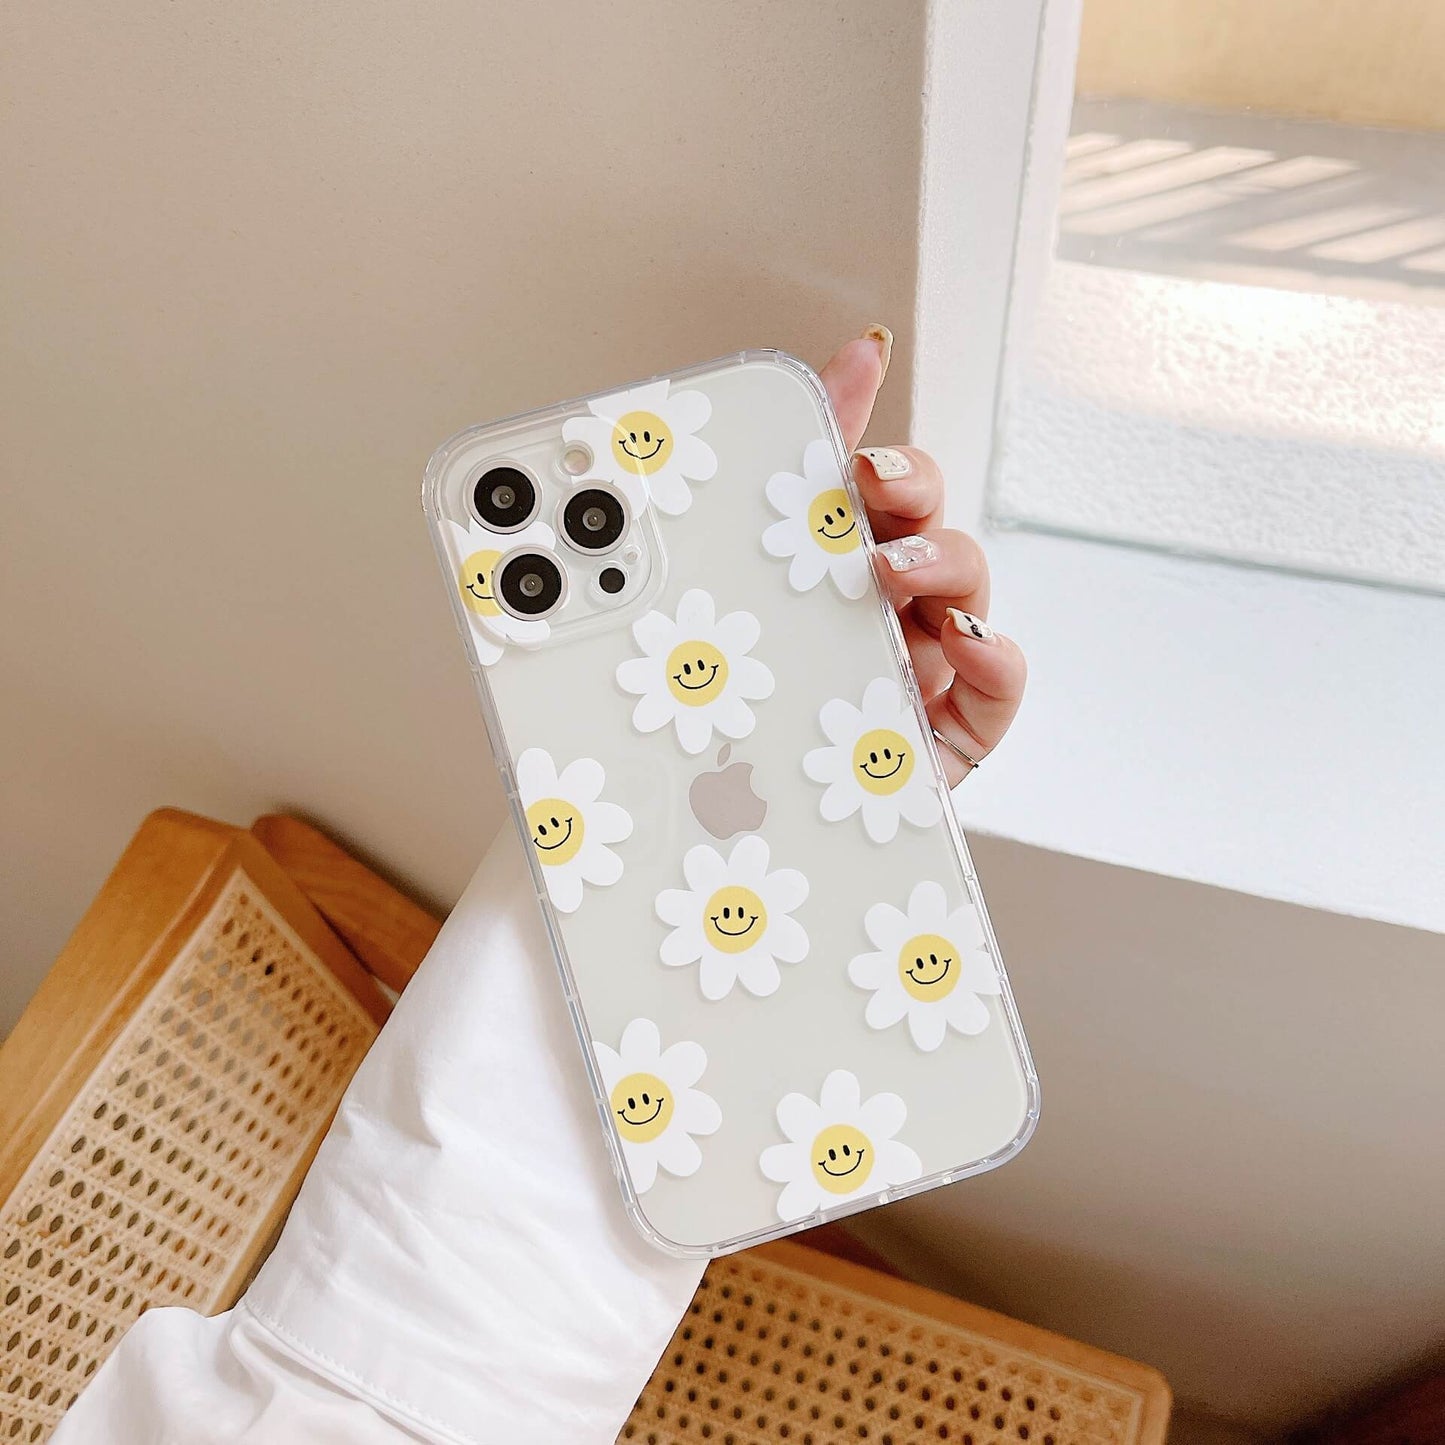 Vinilo o funda para iPhone Linda cara de sonrisa pintada soporte de flor de sol transparente claro